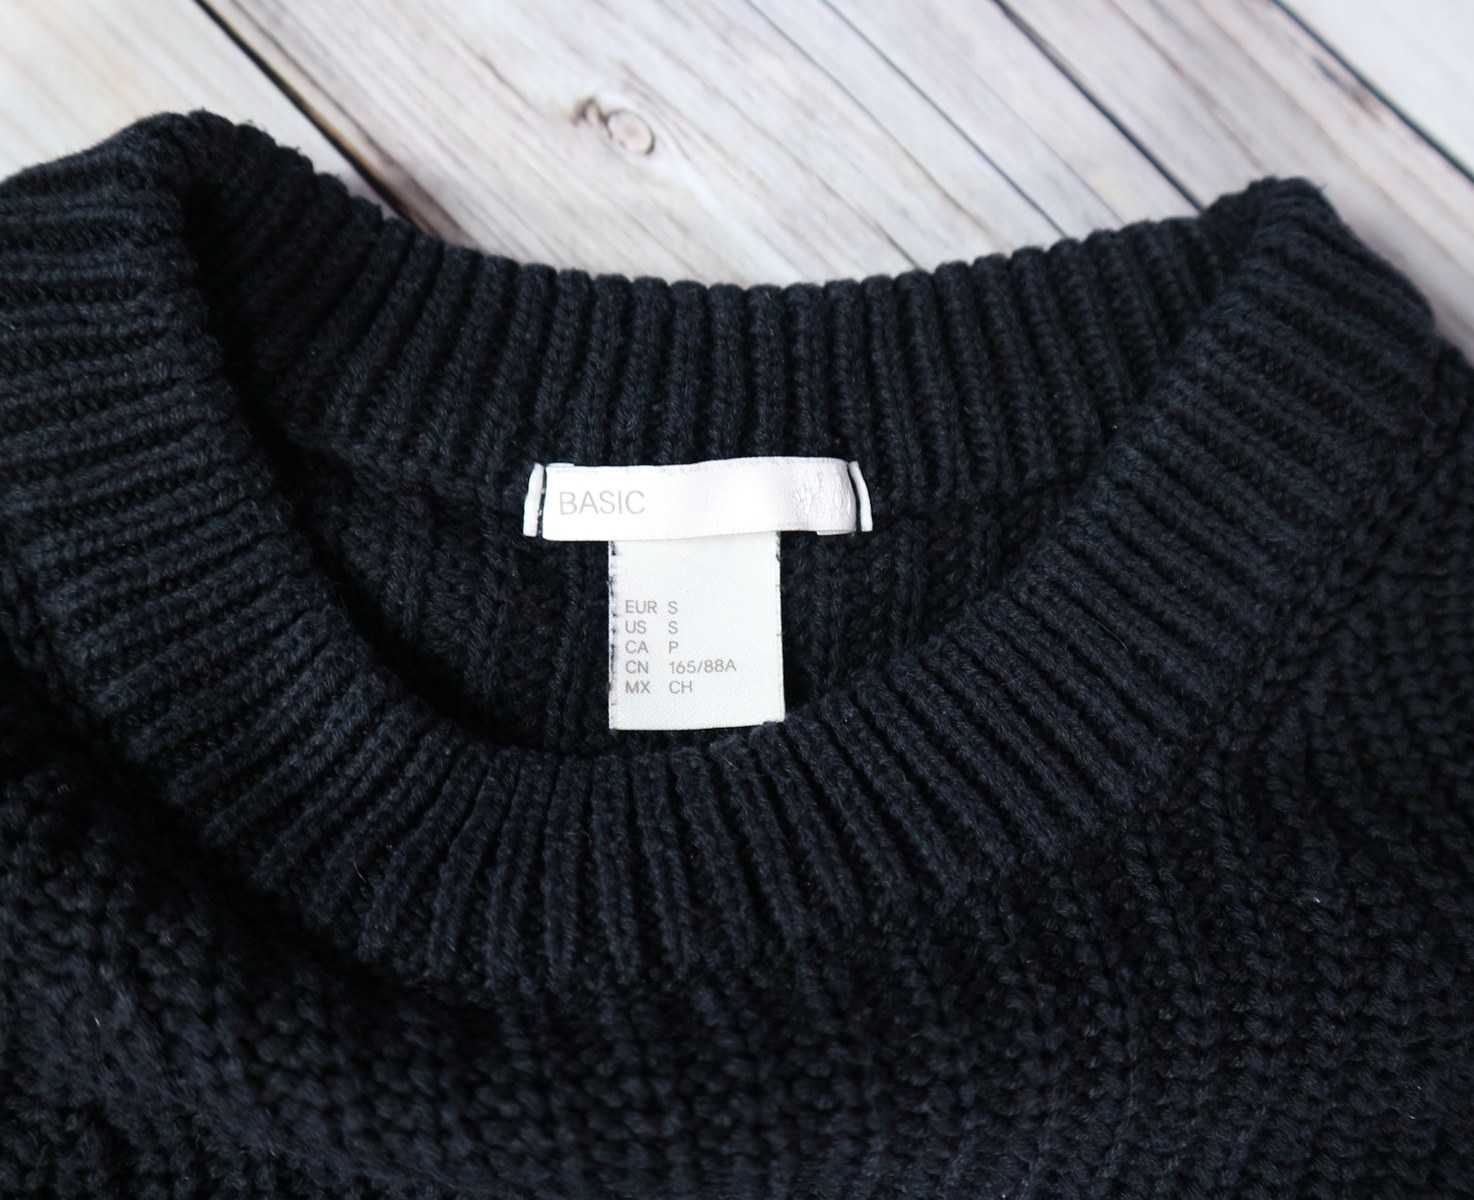 H&M | grubszy czarny sweter  S